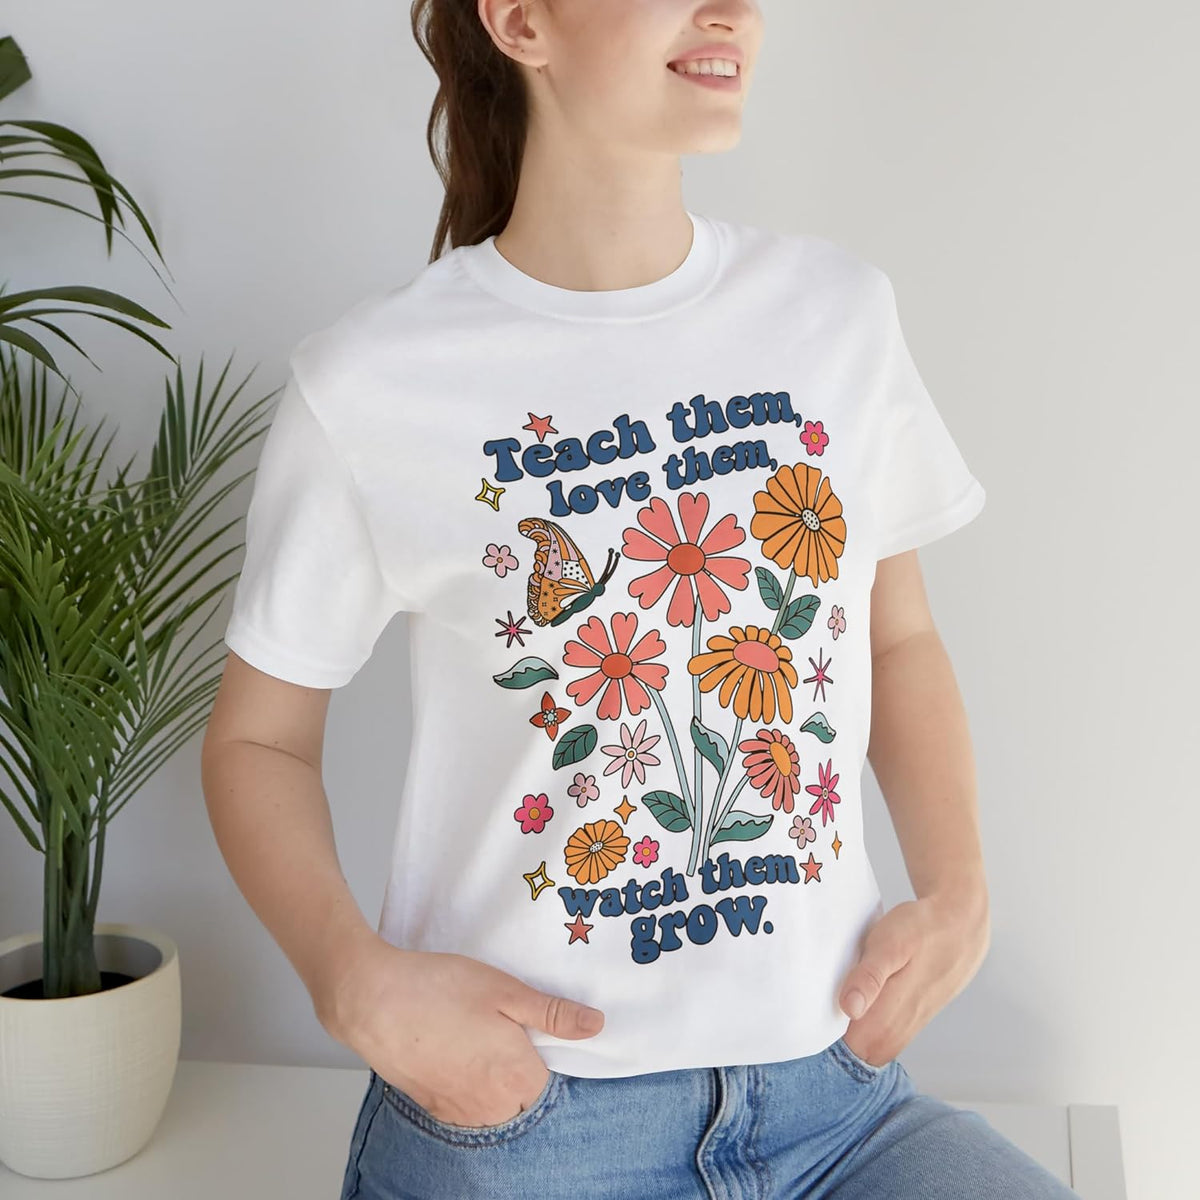 Wildflowers Teach Them Love Them Watch Them Grow Shirt